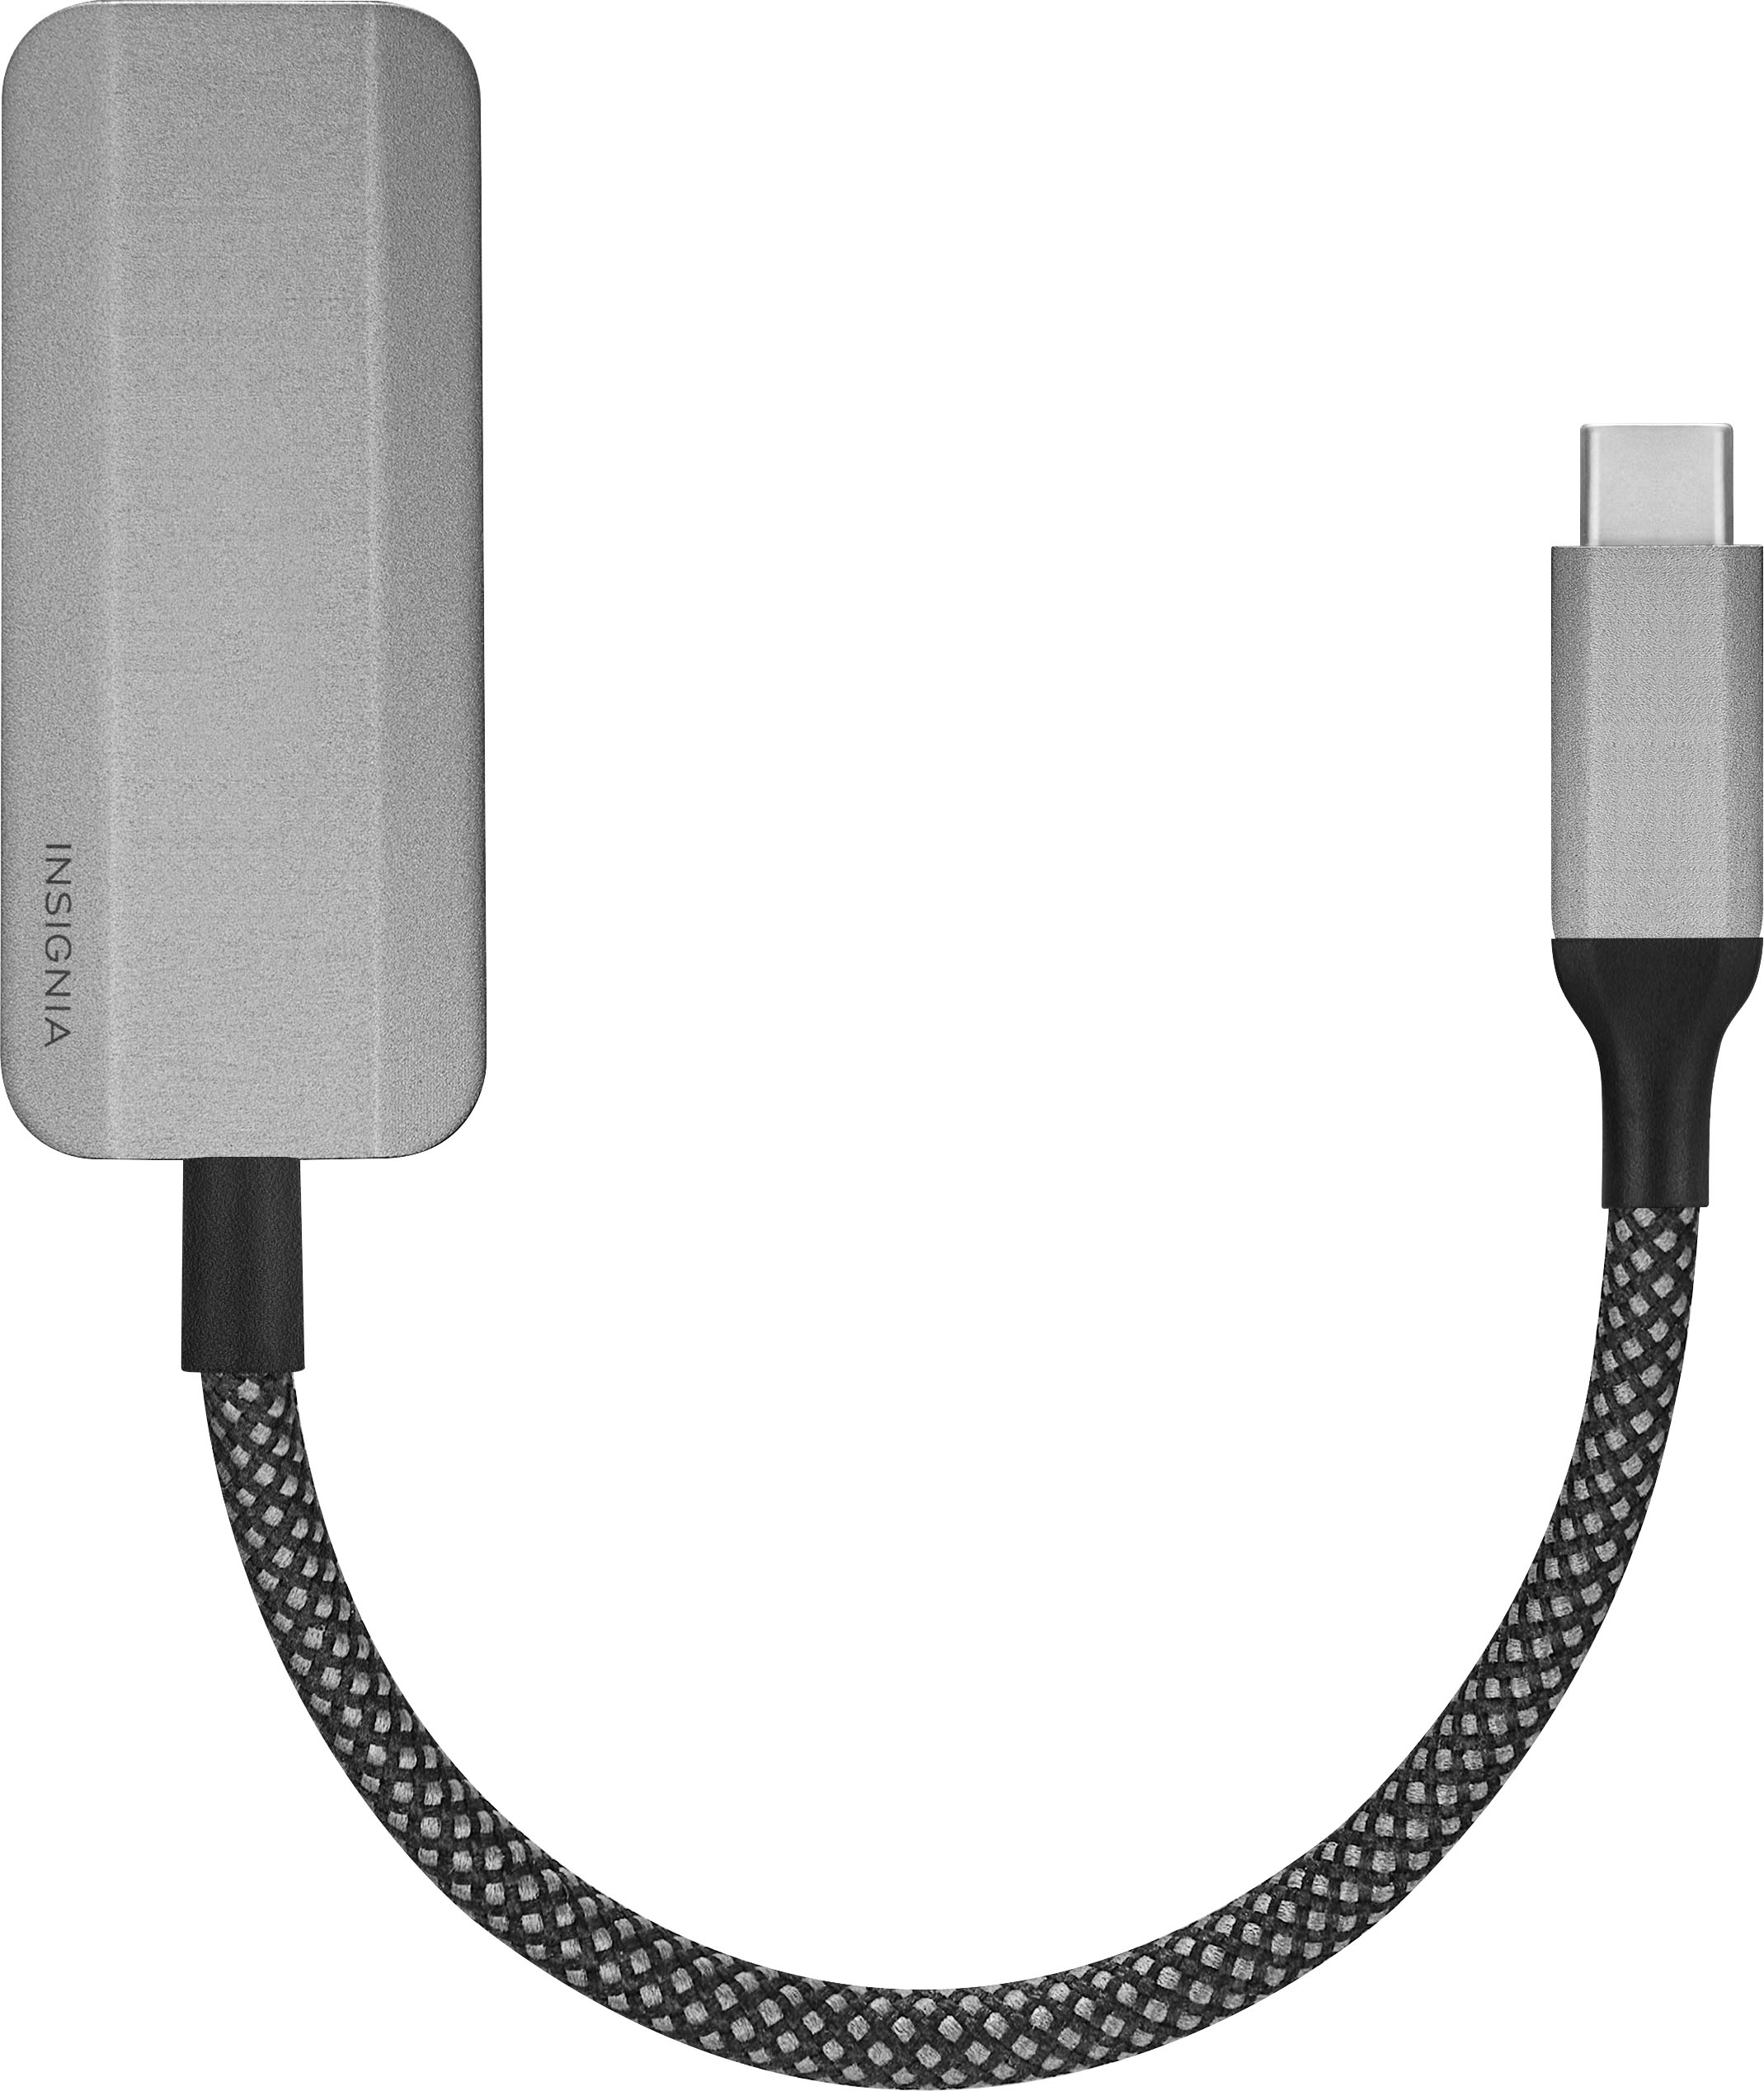 Left View: Hyper - HyperDrive Viper 10-in-2 USB-C Hub - Space Gray